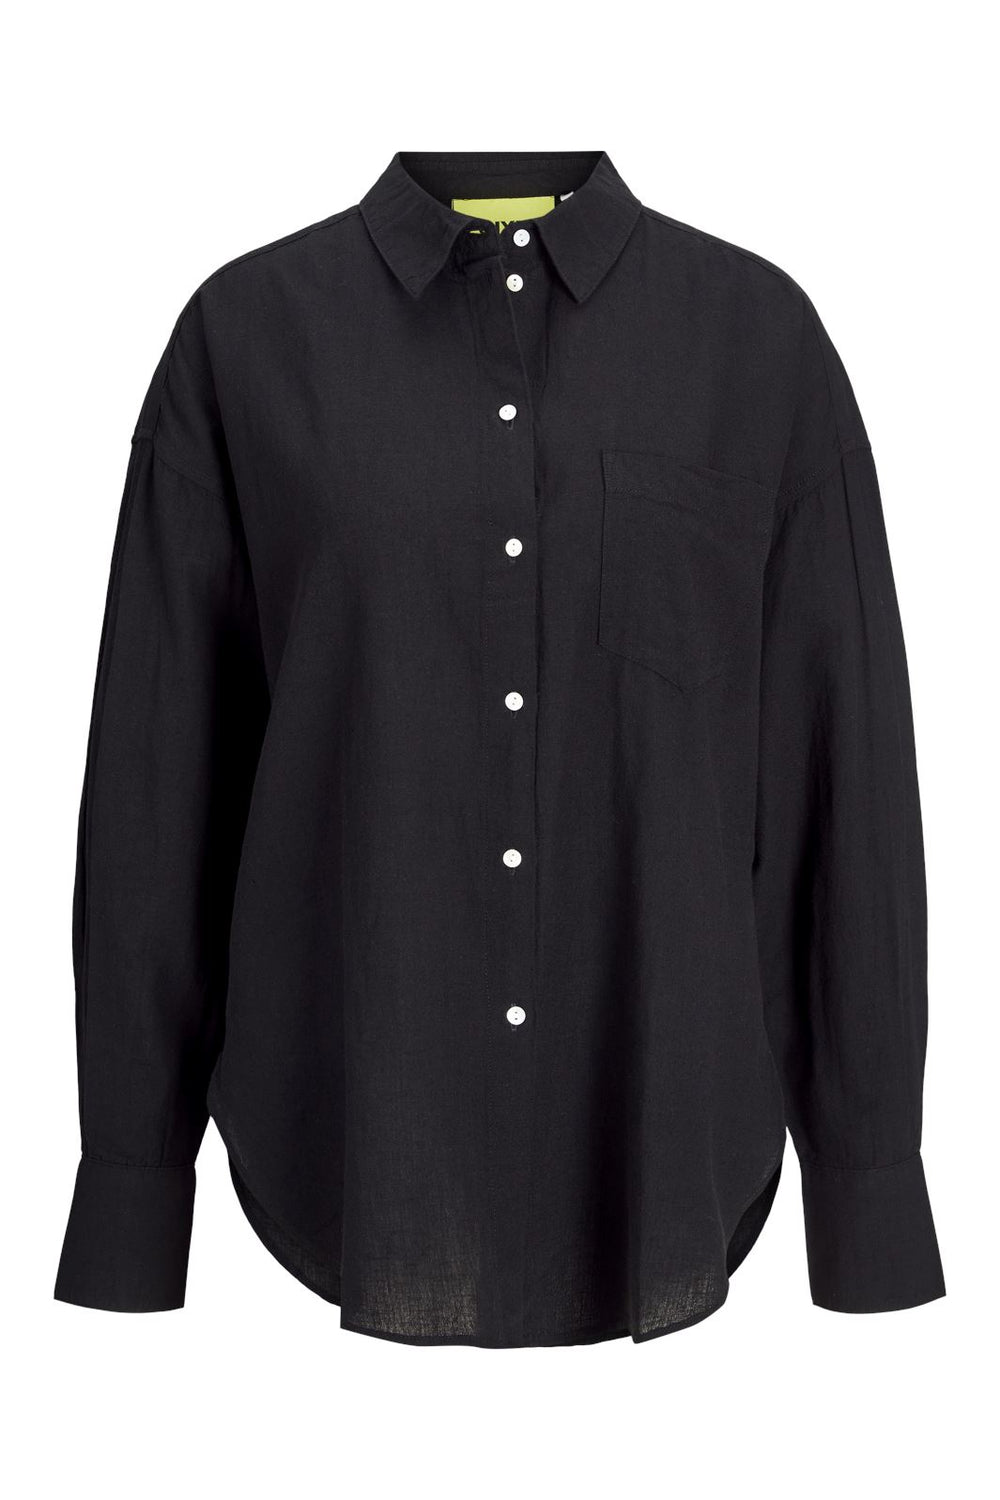 Jjxx - Jxjamie Ls Rlx Linen Blend Shirt Sn - 4493799 Black